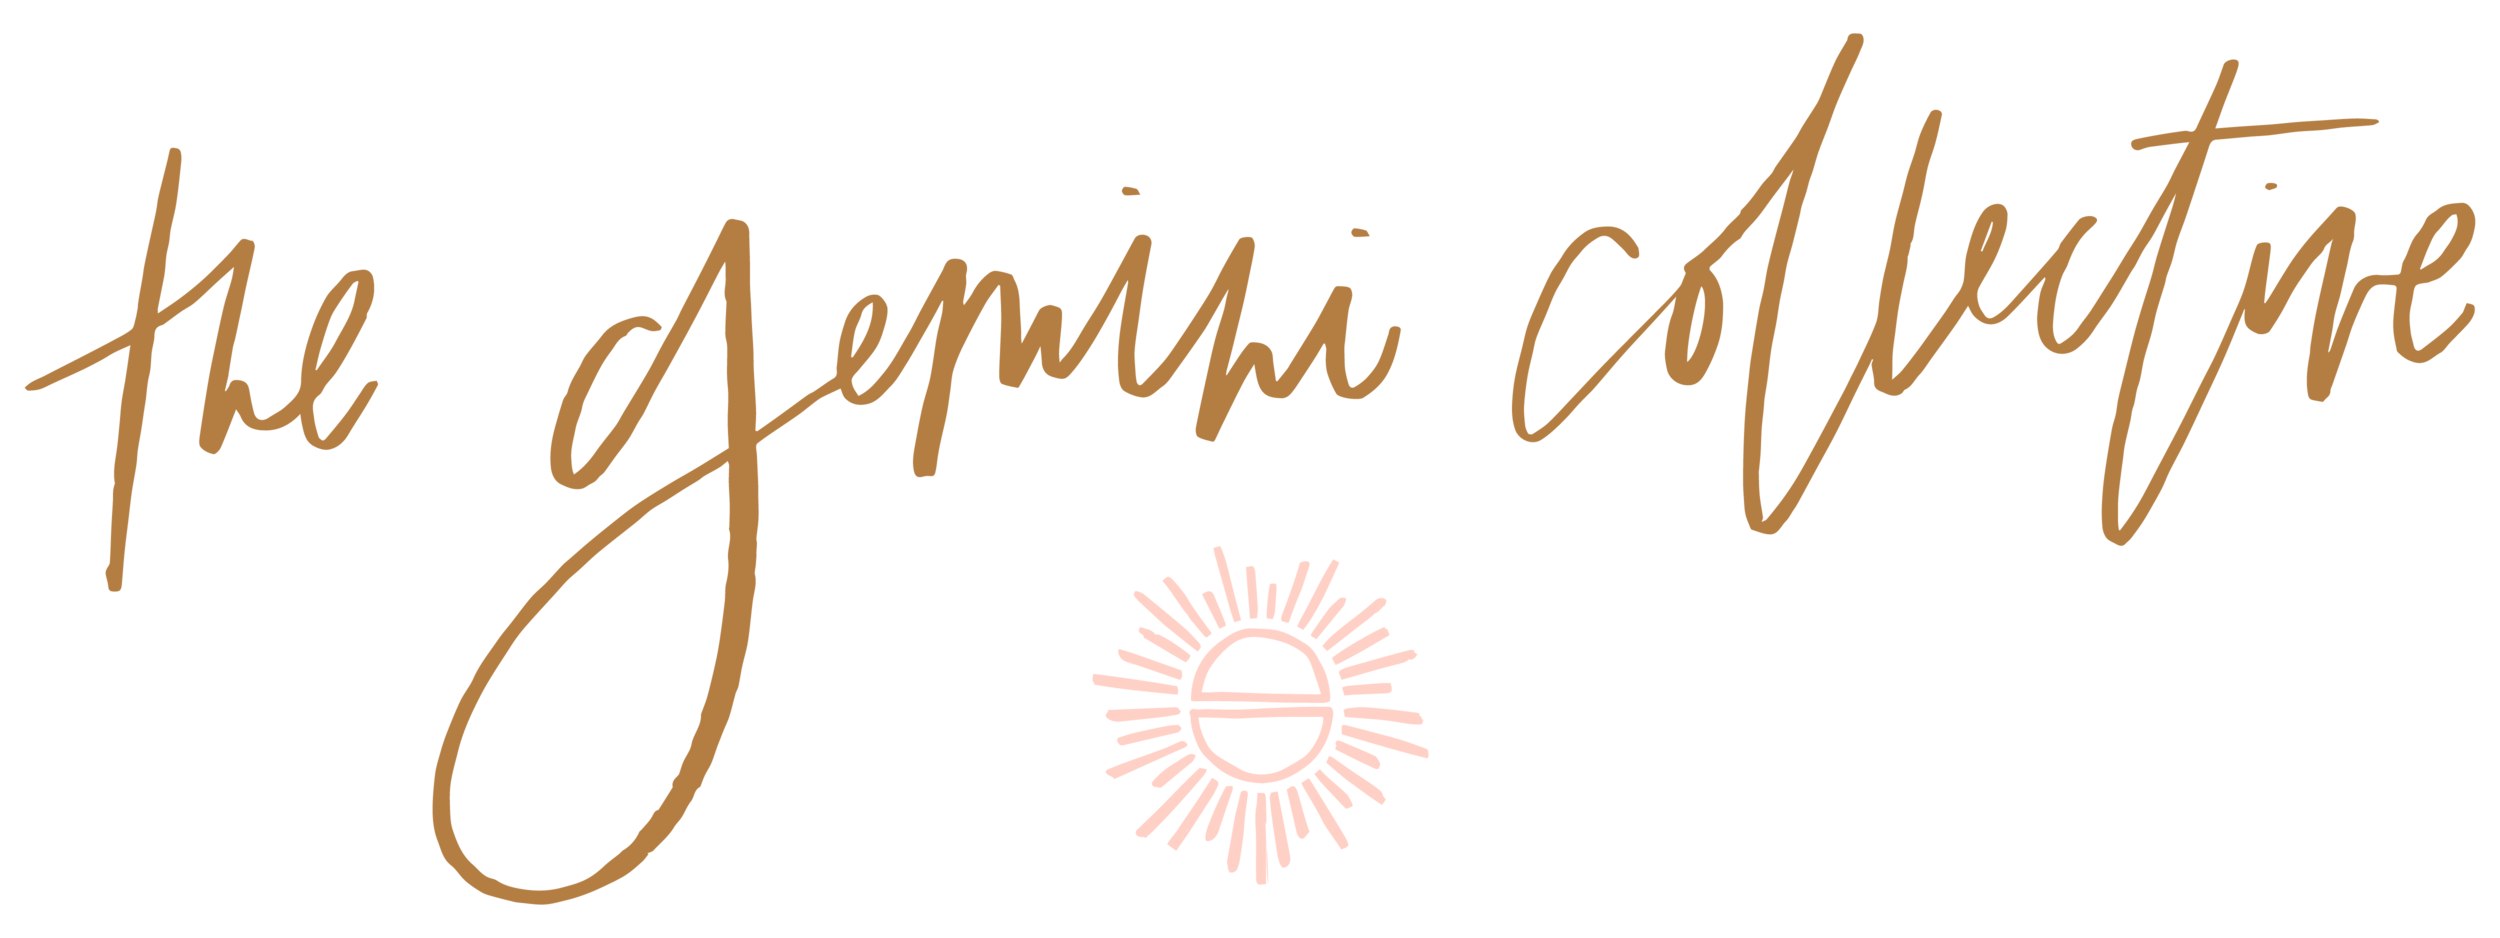 The Gemini Collective